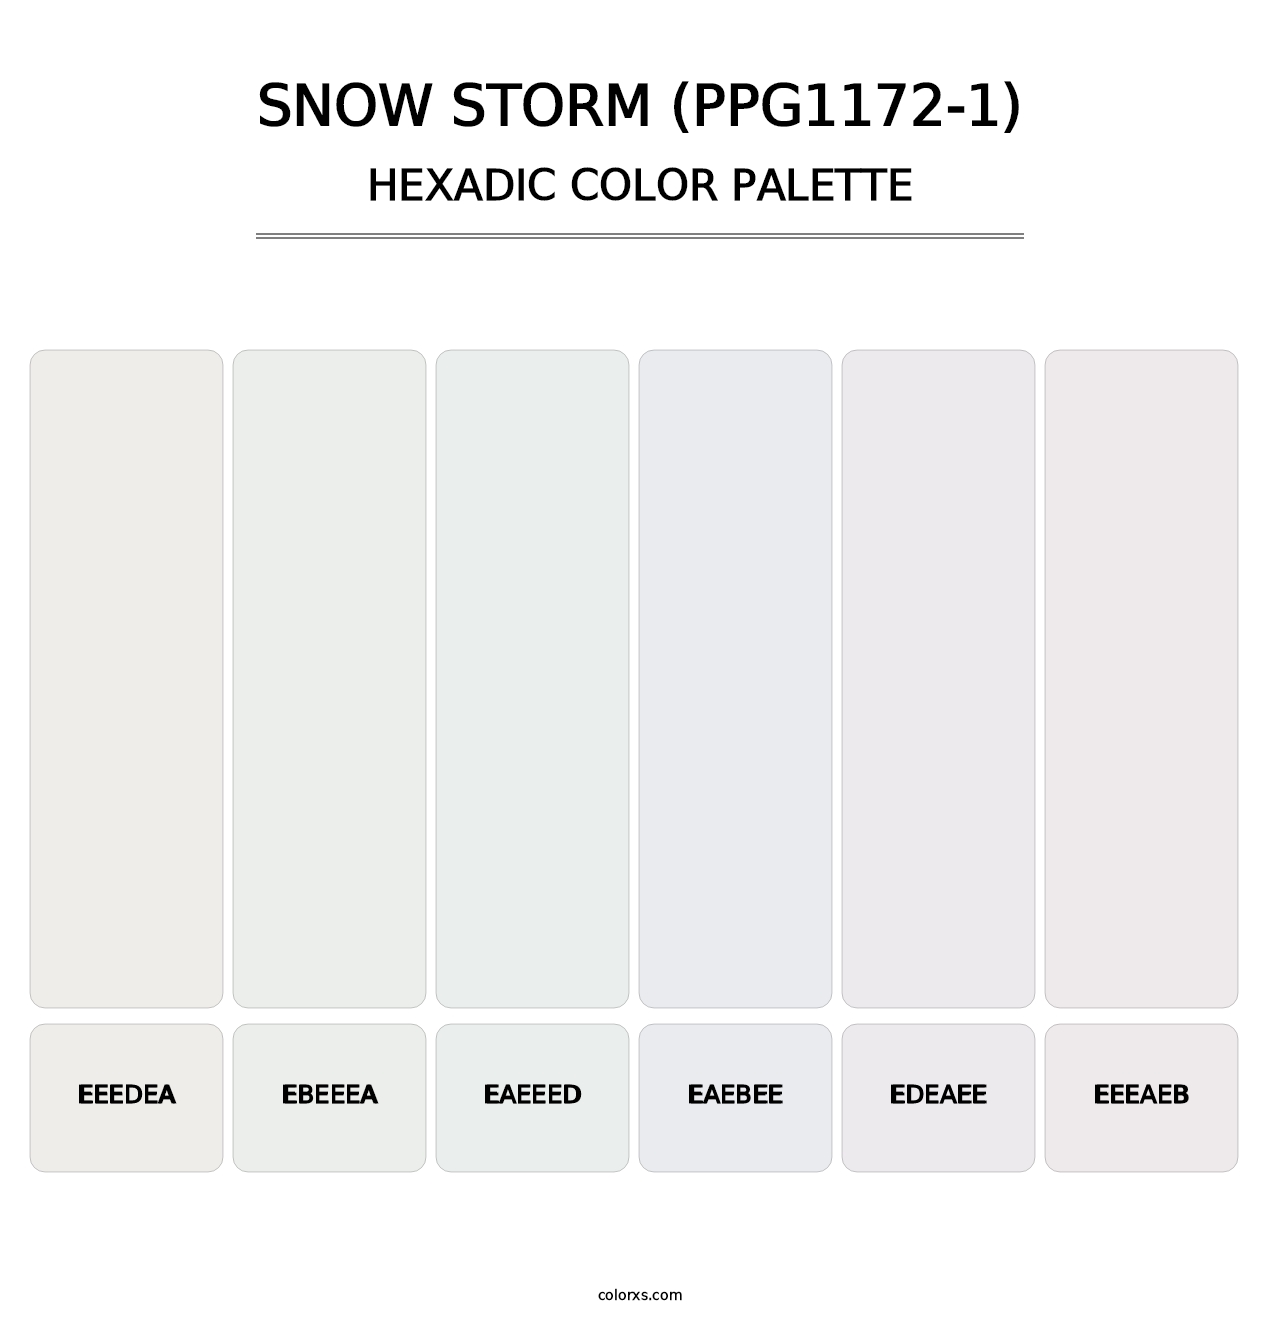 Snow Storm (PPG1172-1) - Hexadic Color Palette